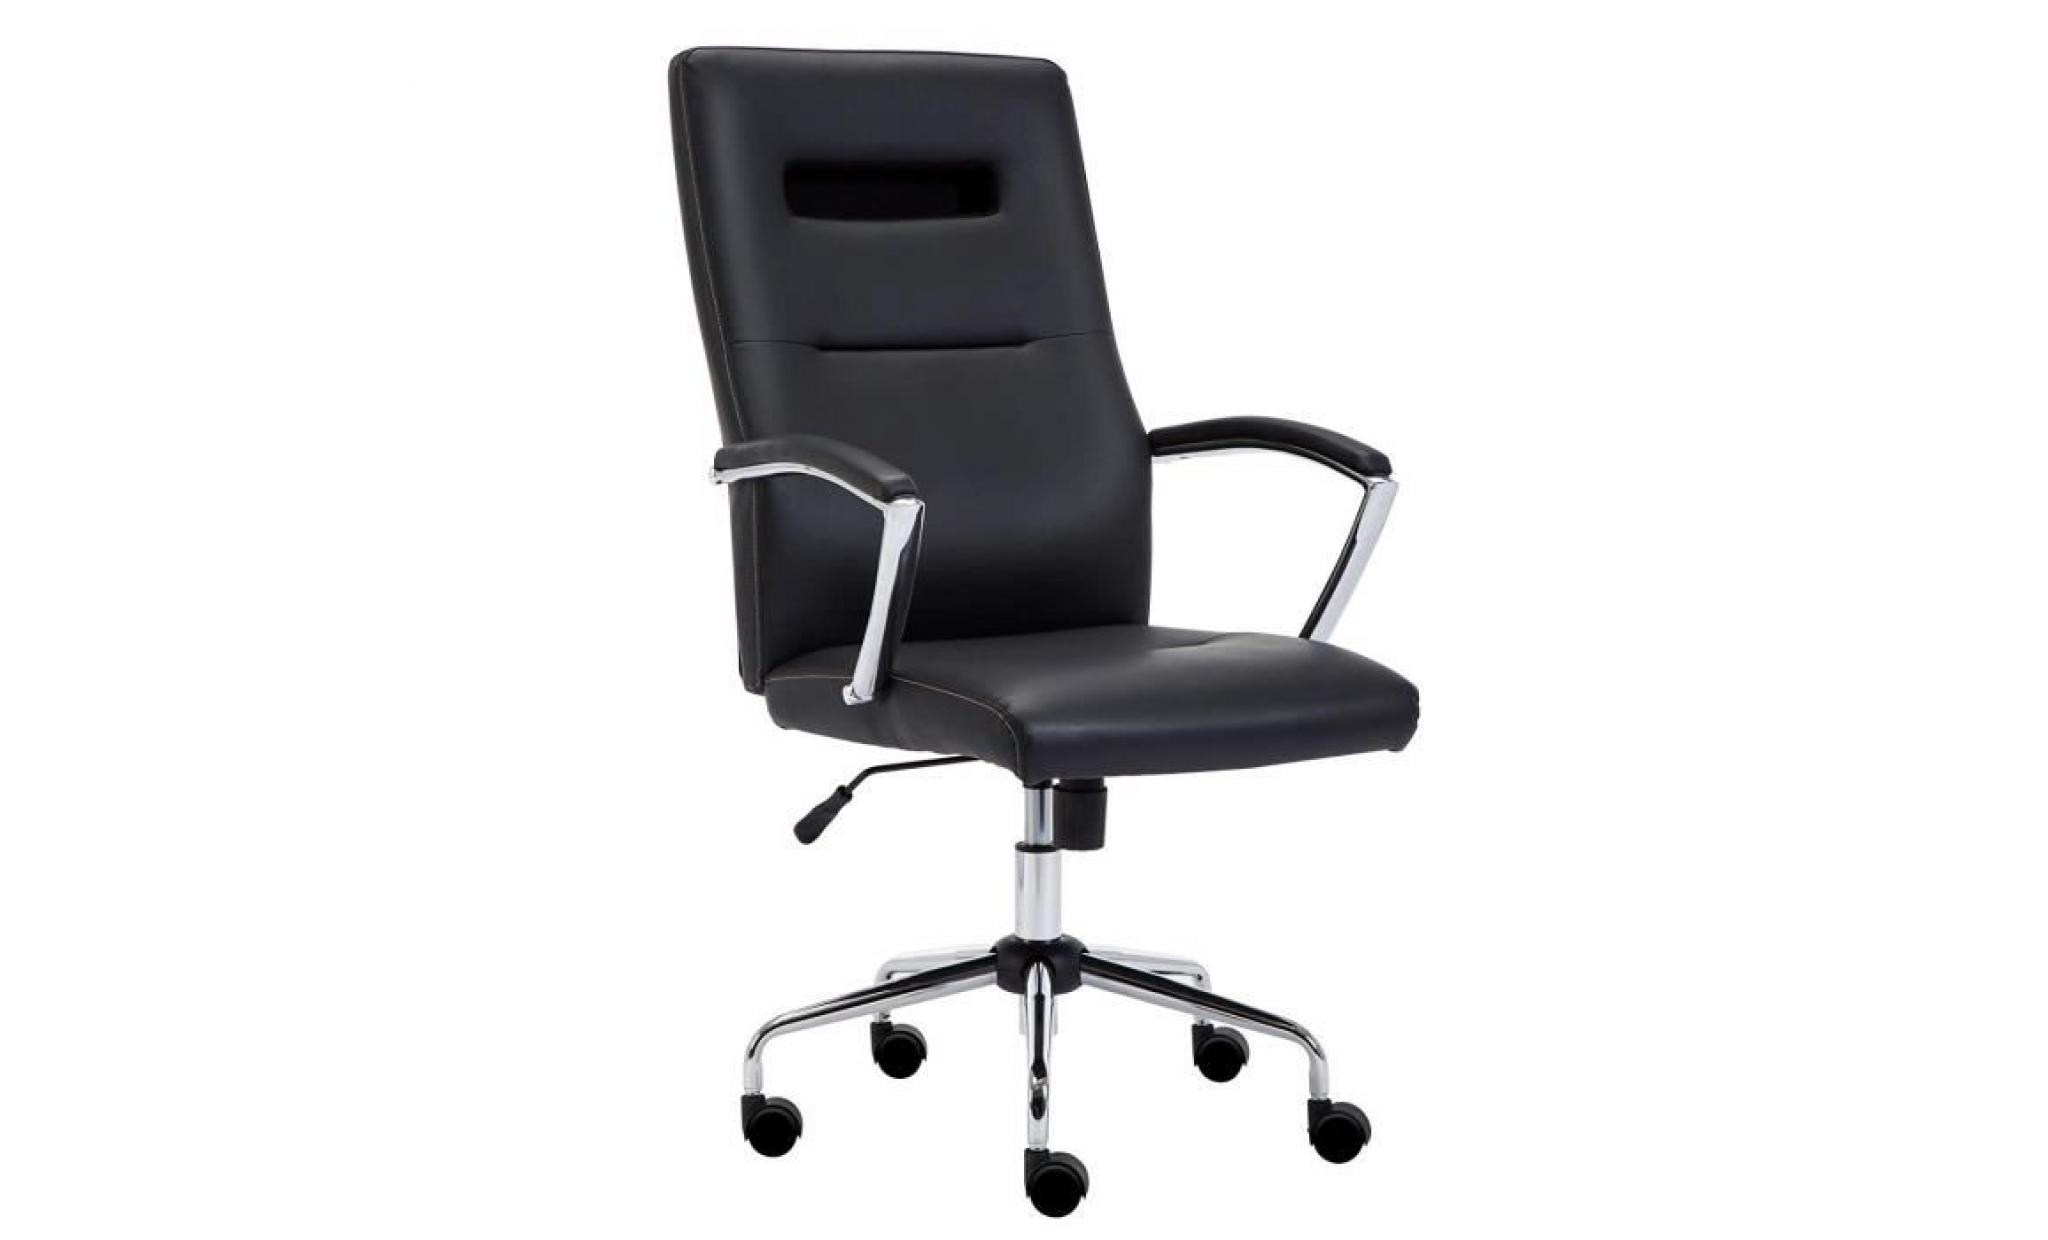 chaise de bureau confortable   fauteuil de bureau   pu siège de bureau   hauteur réglable  gris  intimate wm heart